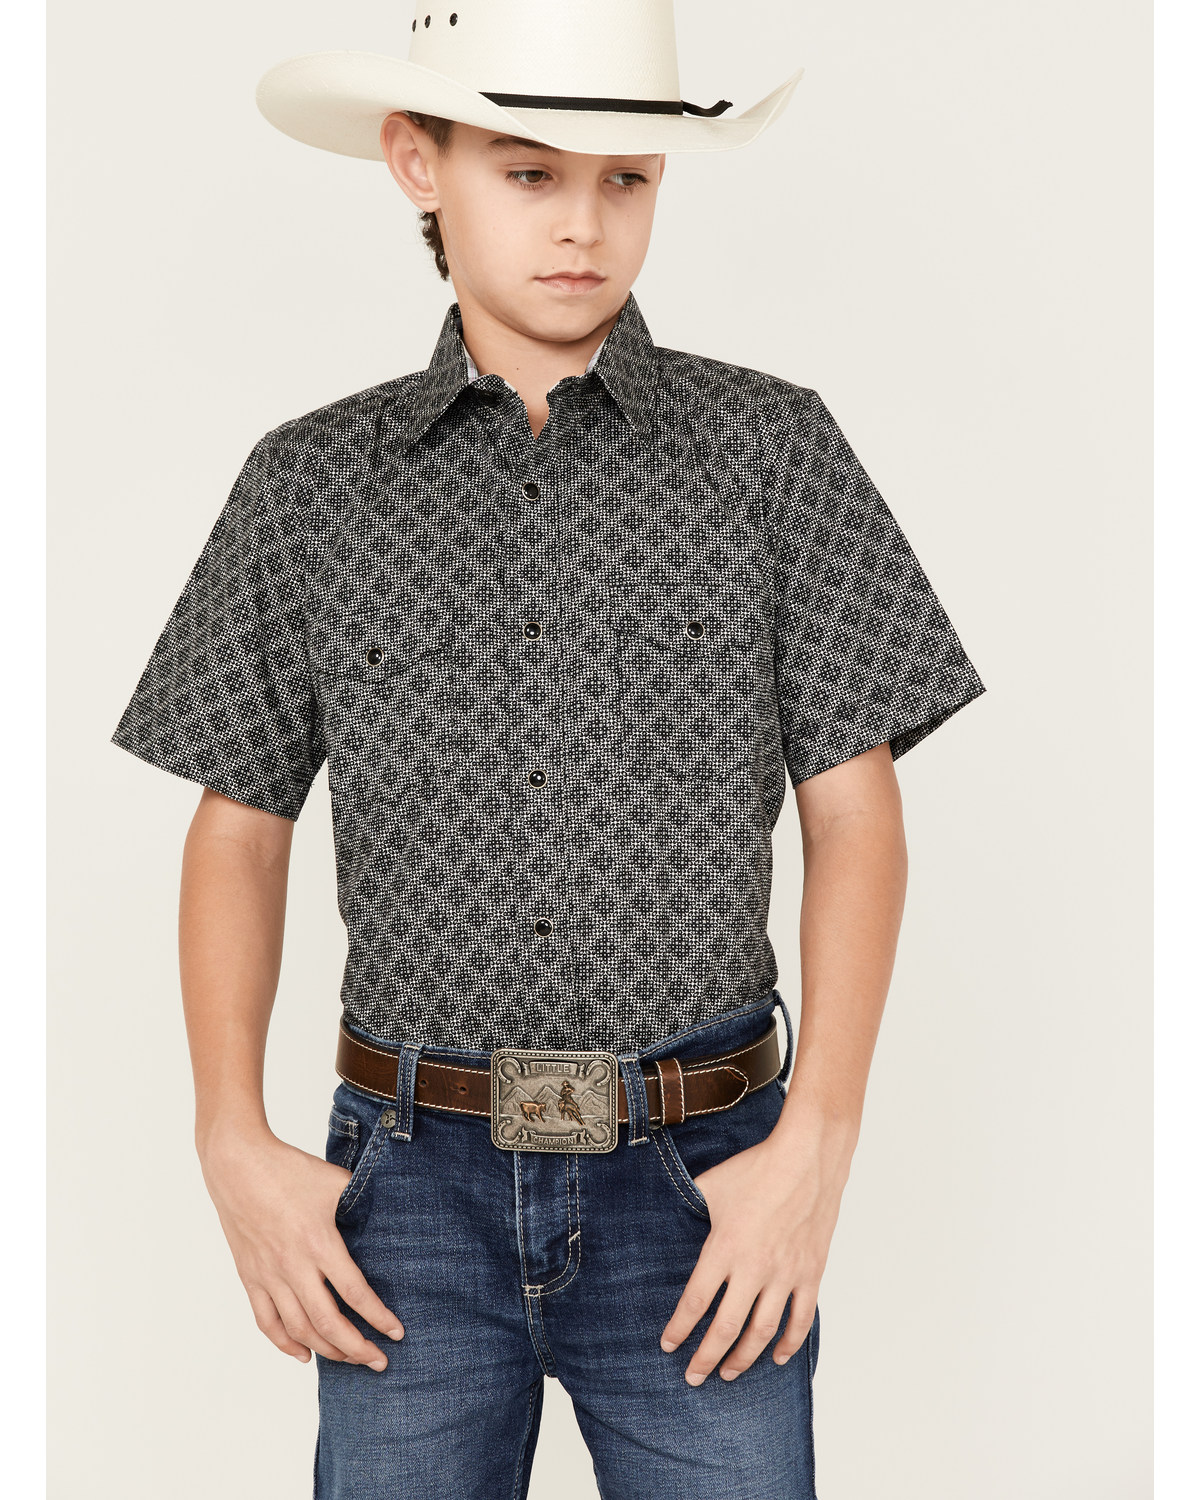 Panhandle Boys' Geo Print Short Sleeve Western Snap Shirt